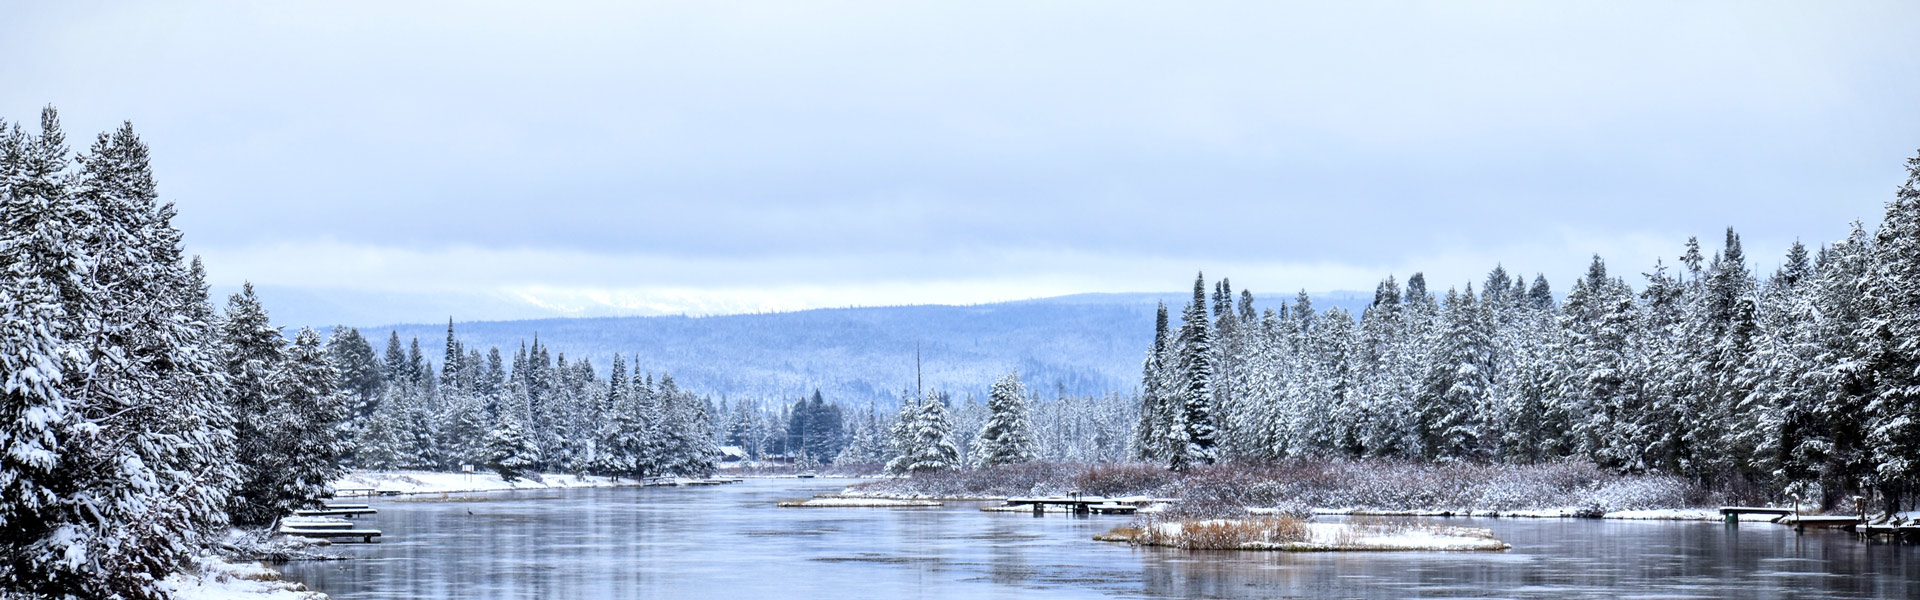 Winter river scene